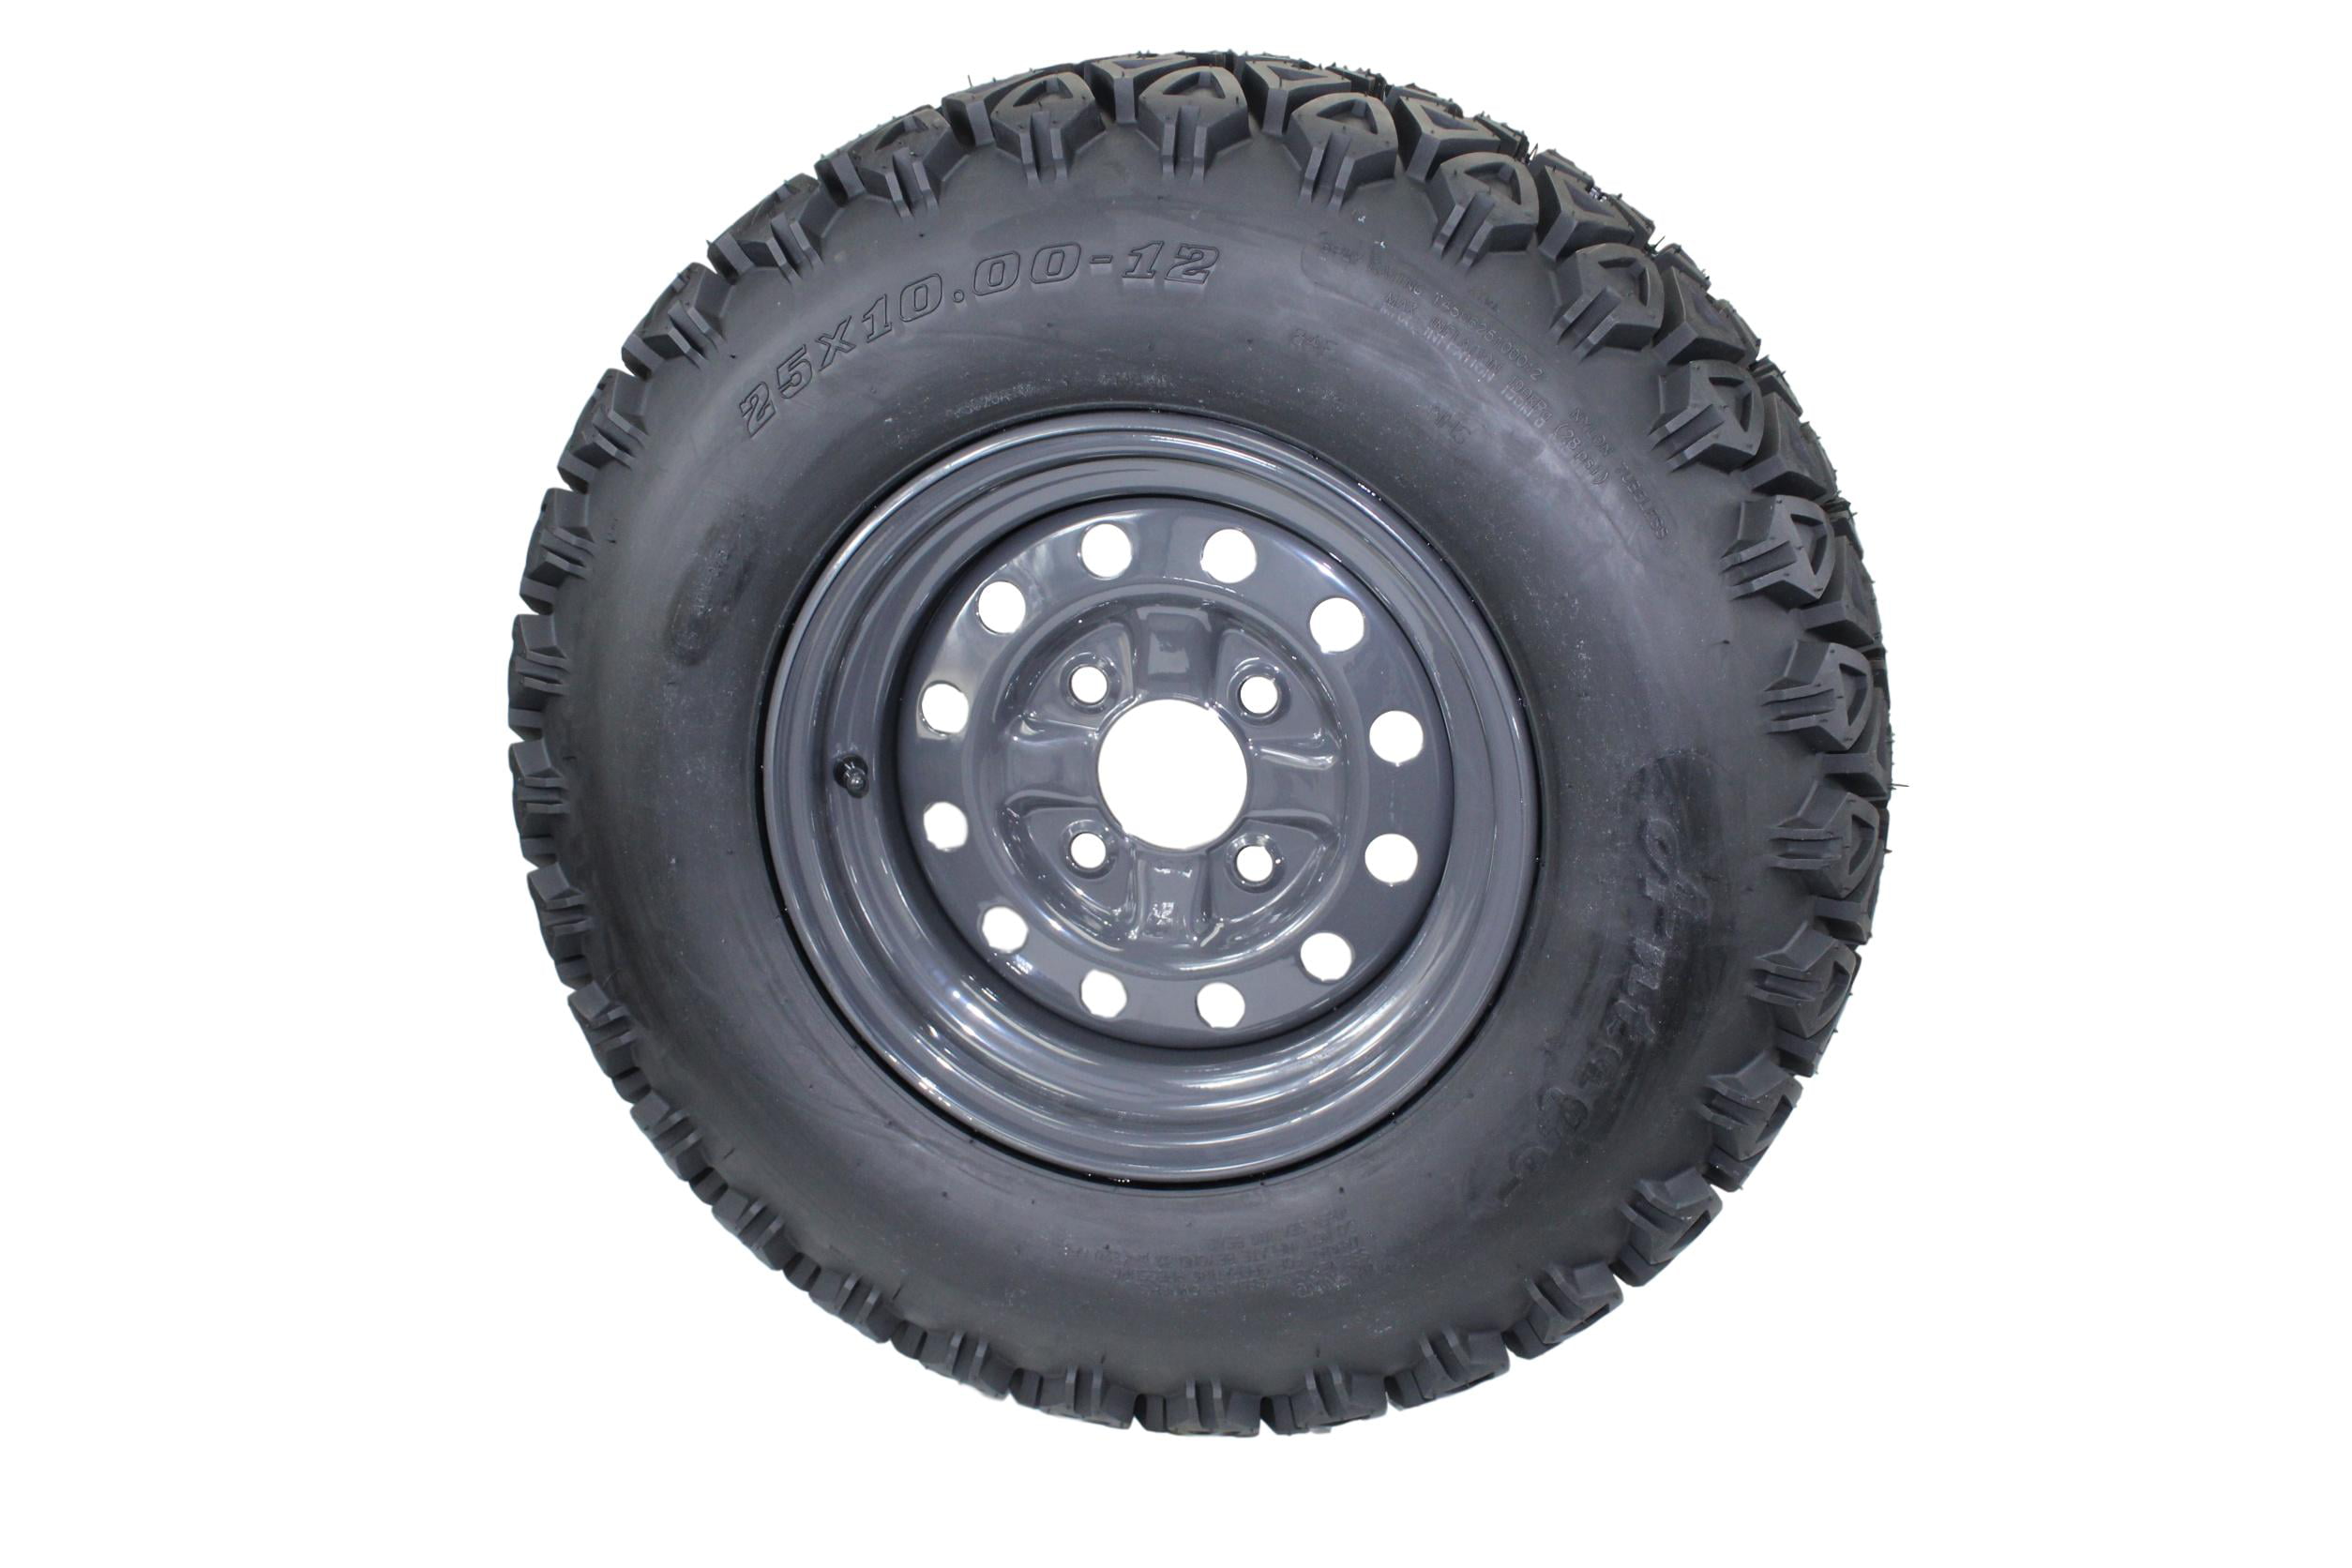 Qty:1) 25x10.00-12 tire with 4 Hole wheel for Kubota RTV’s 900, 1100, @ 114...